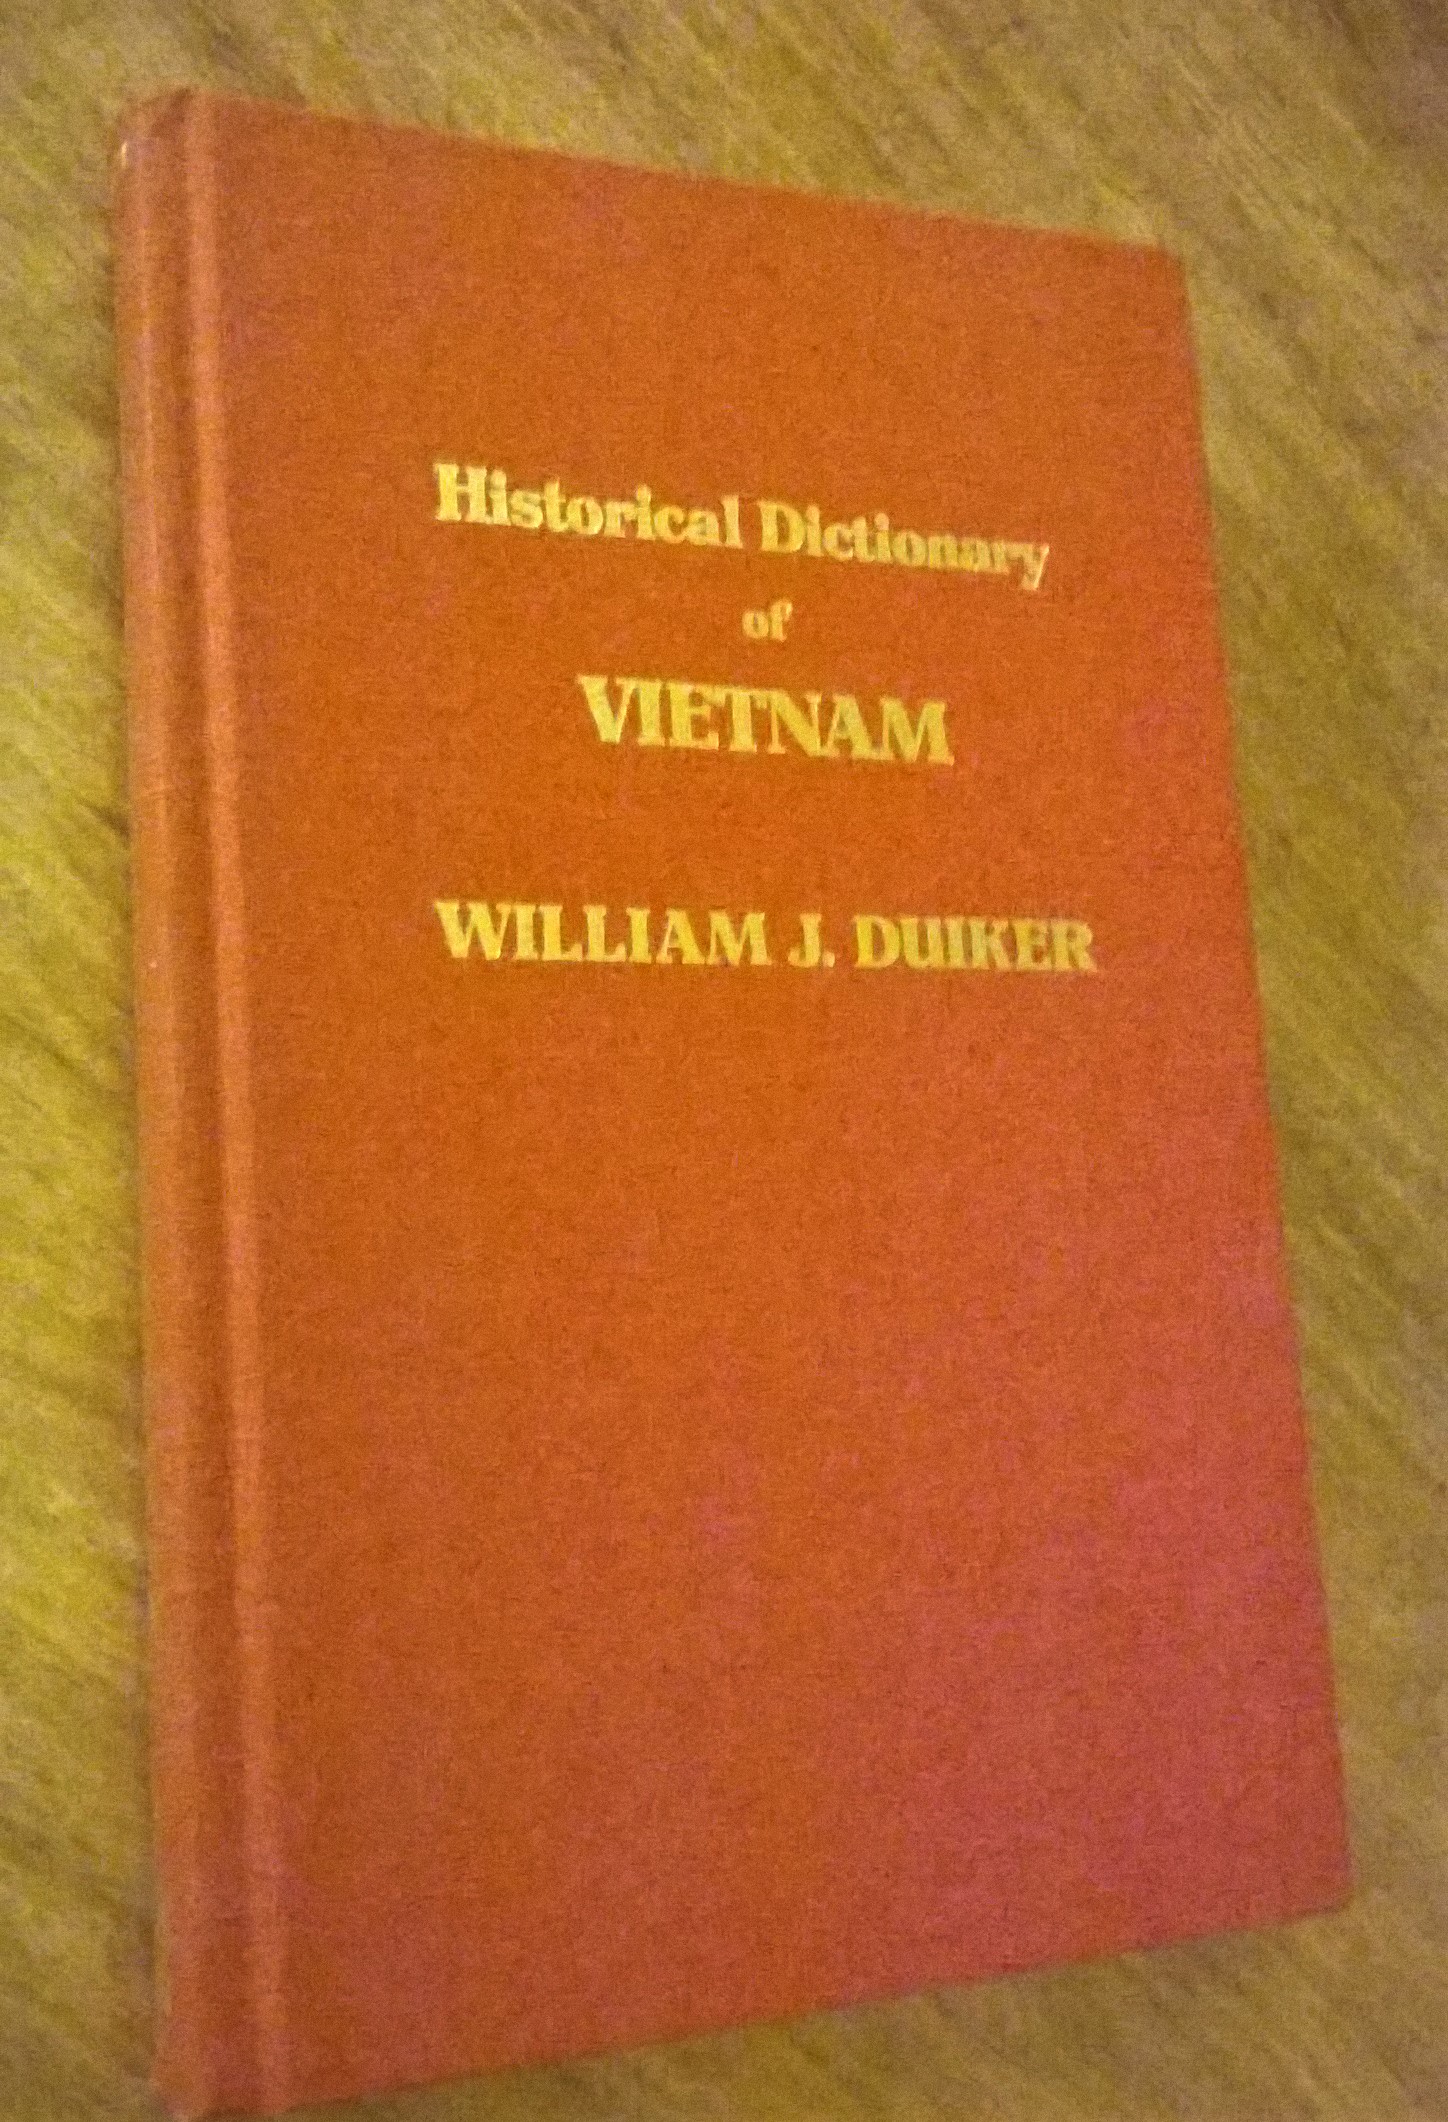 Historical Dictionary of Vietnam - William J. Duiker